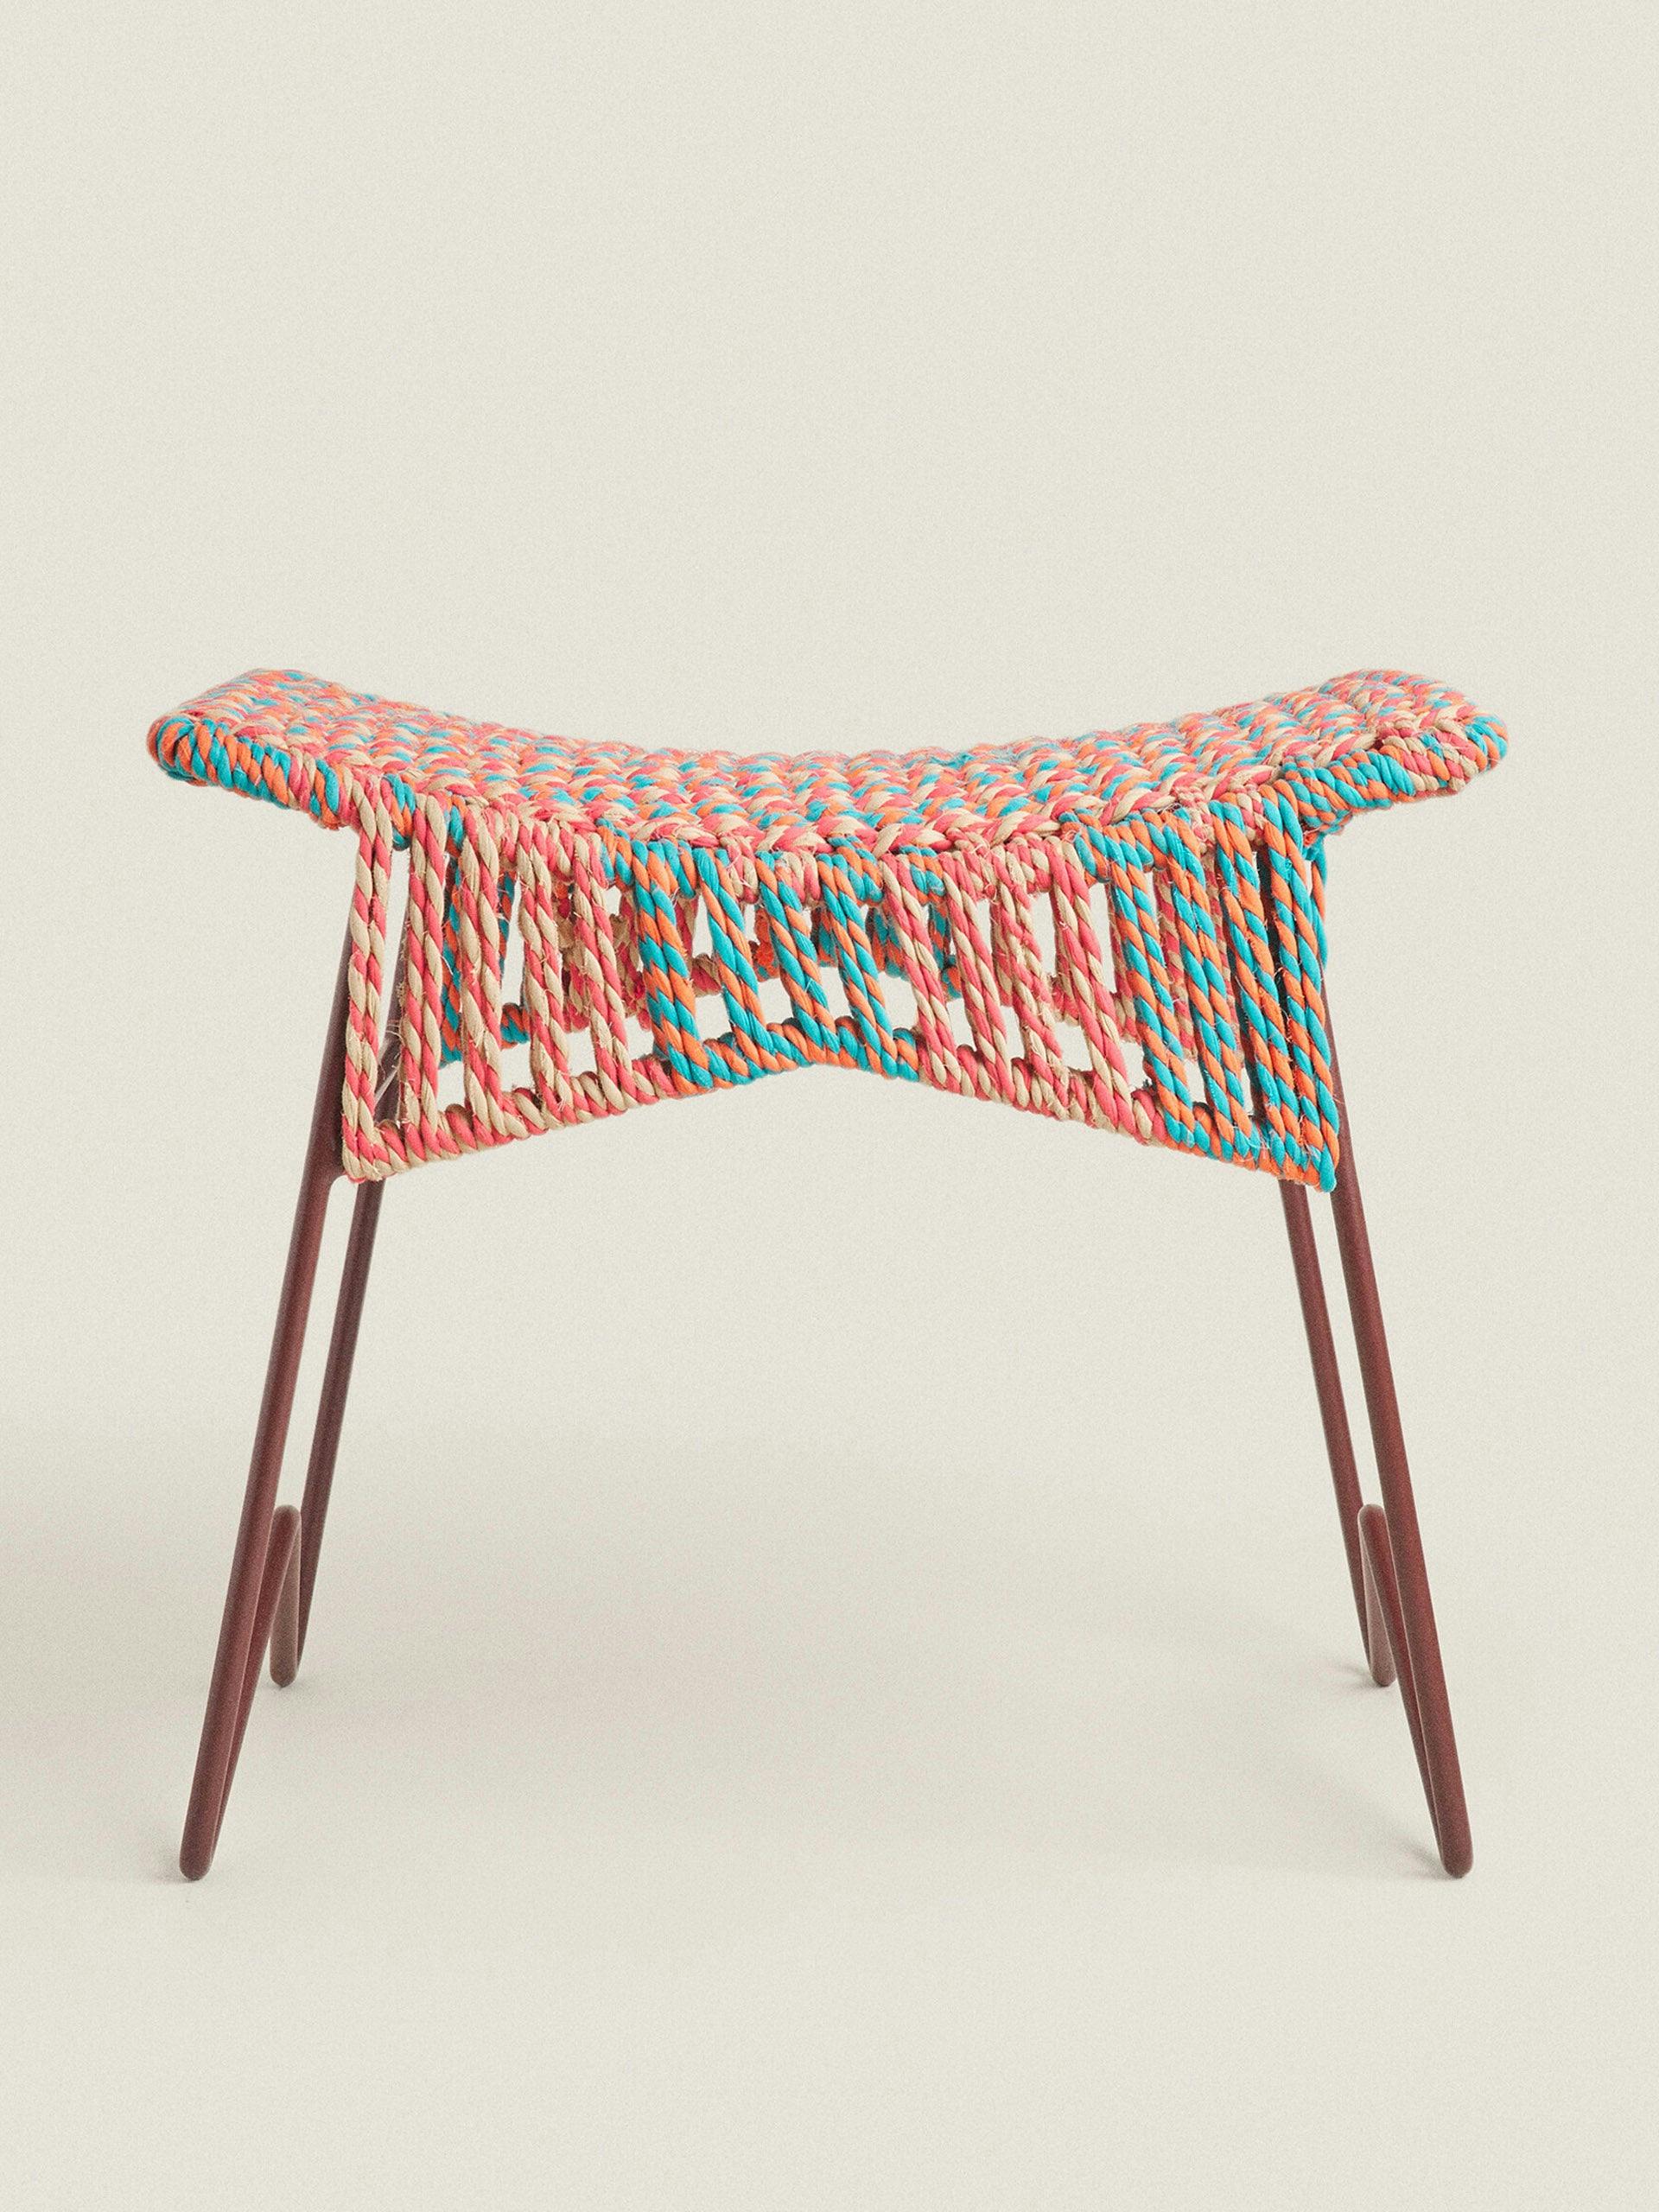 Woven cotton stool